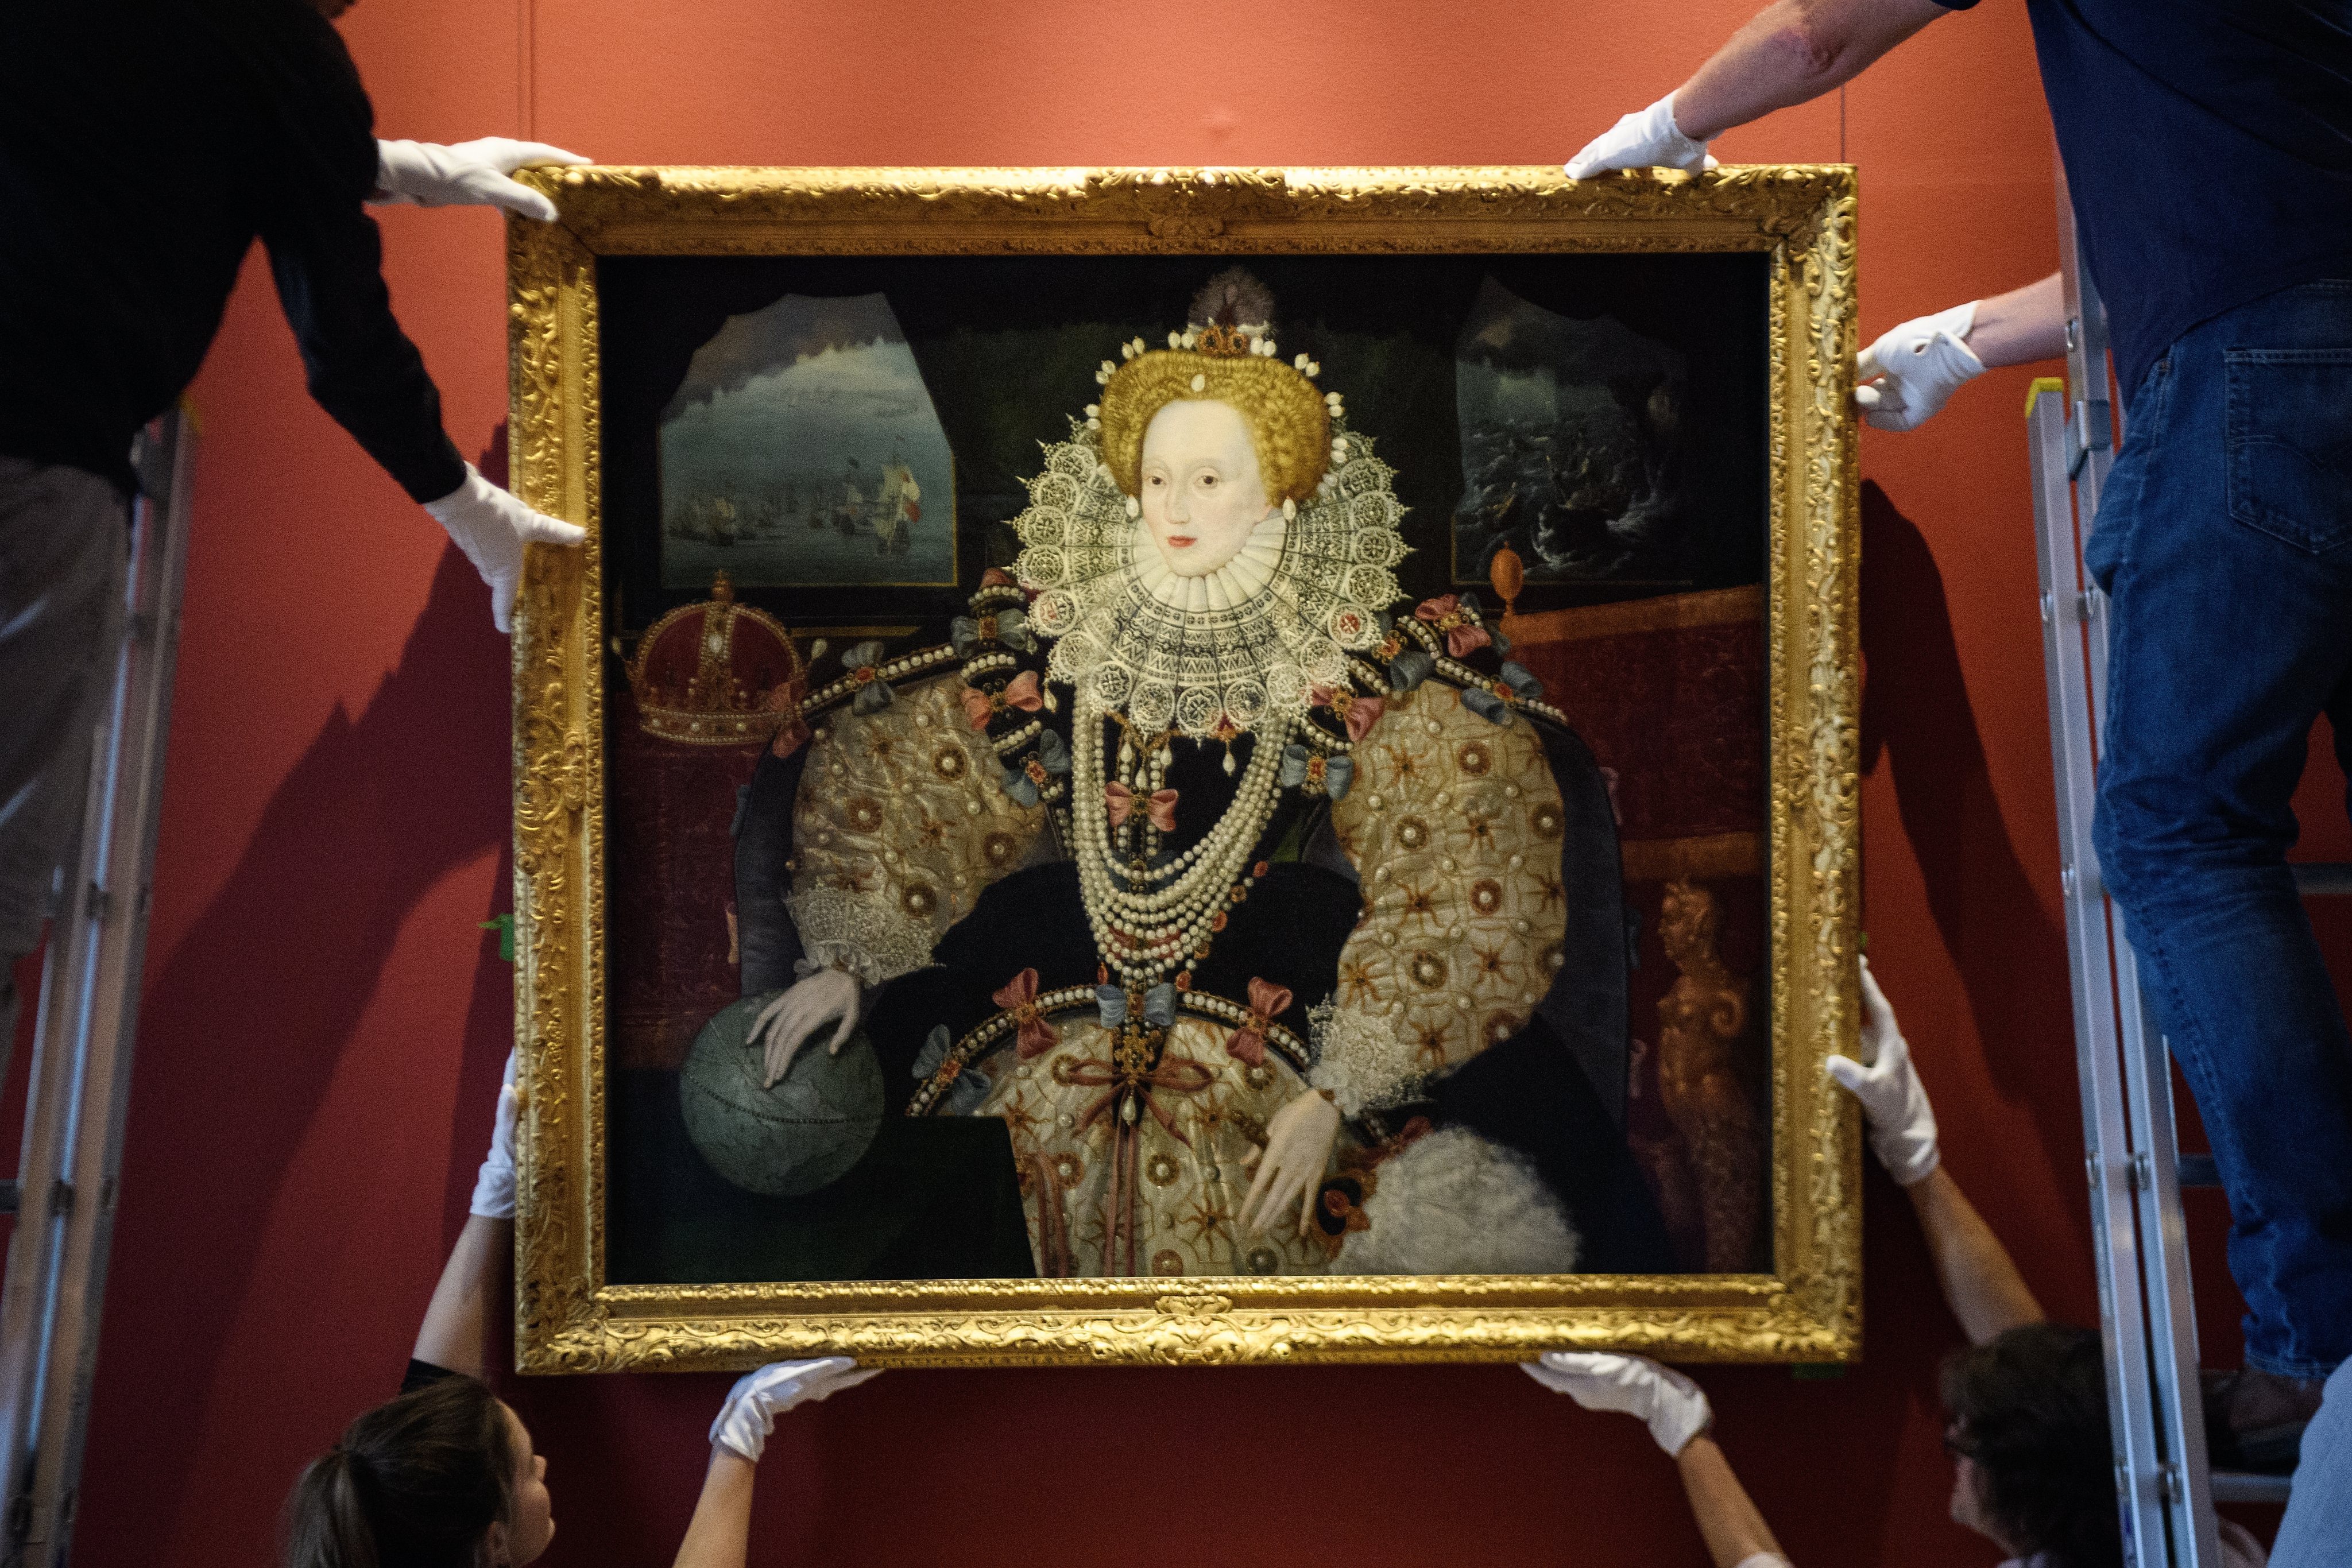 Armada Portrait Of Elizabeth I Is Reinstalled Following Conservation Work